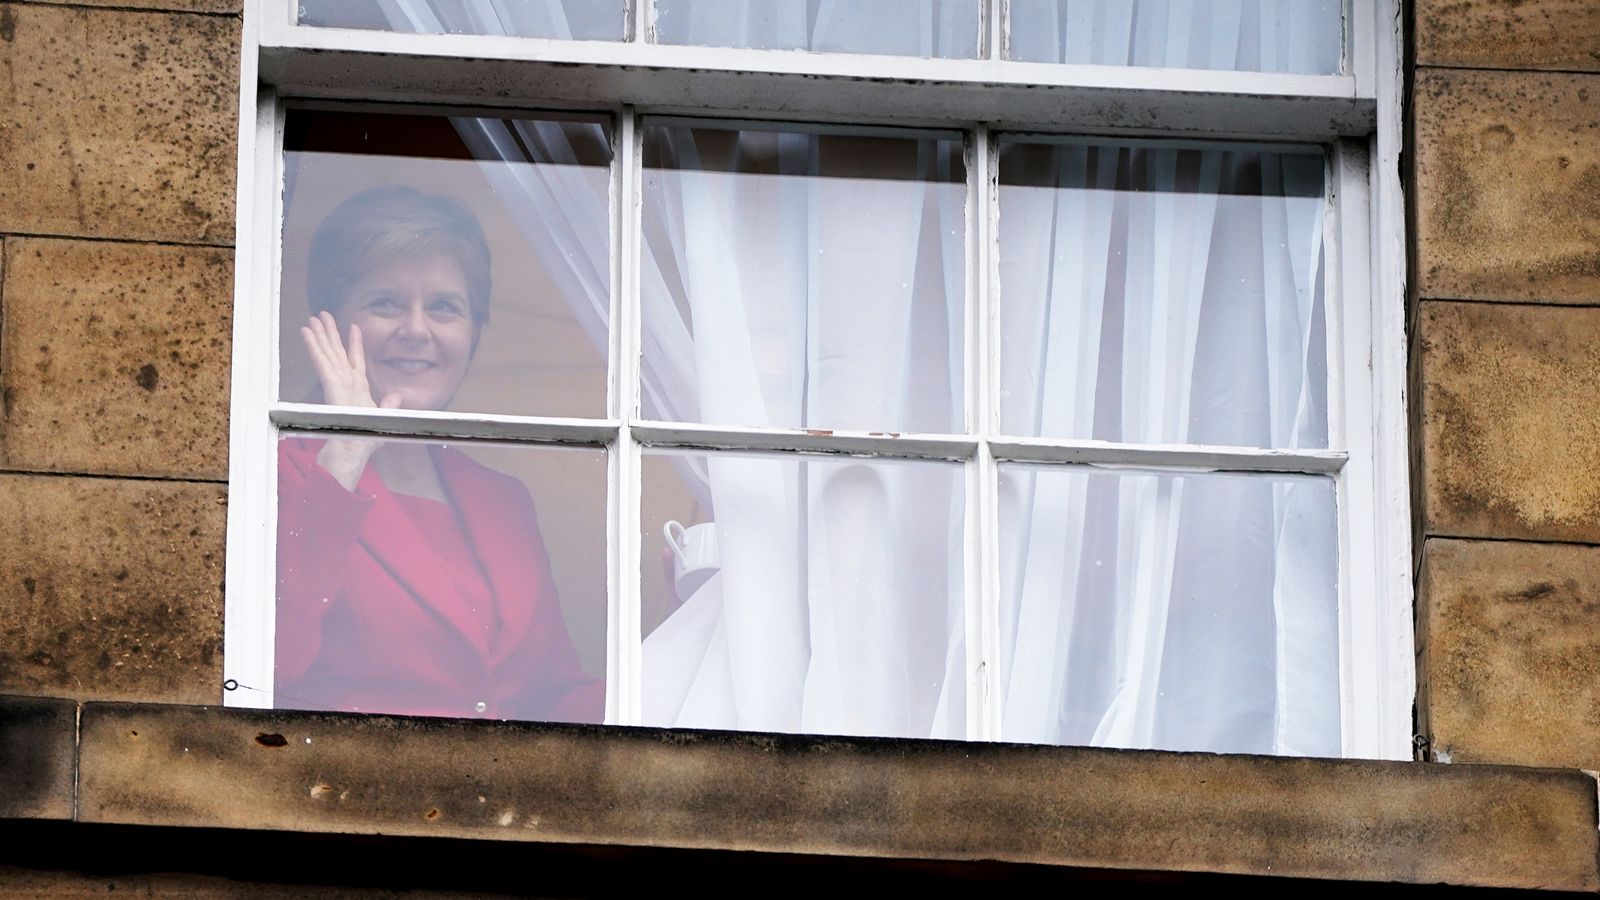 Nicola Sturgeon's resignation could prompt major rethink of indyref2 plans, SNP's Westminster leader suggests